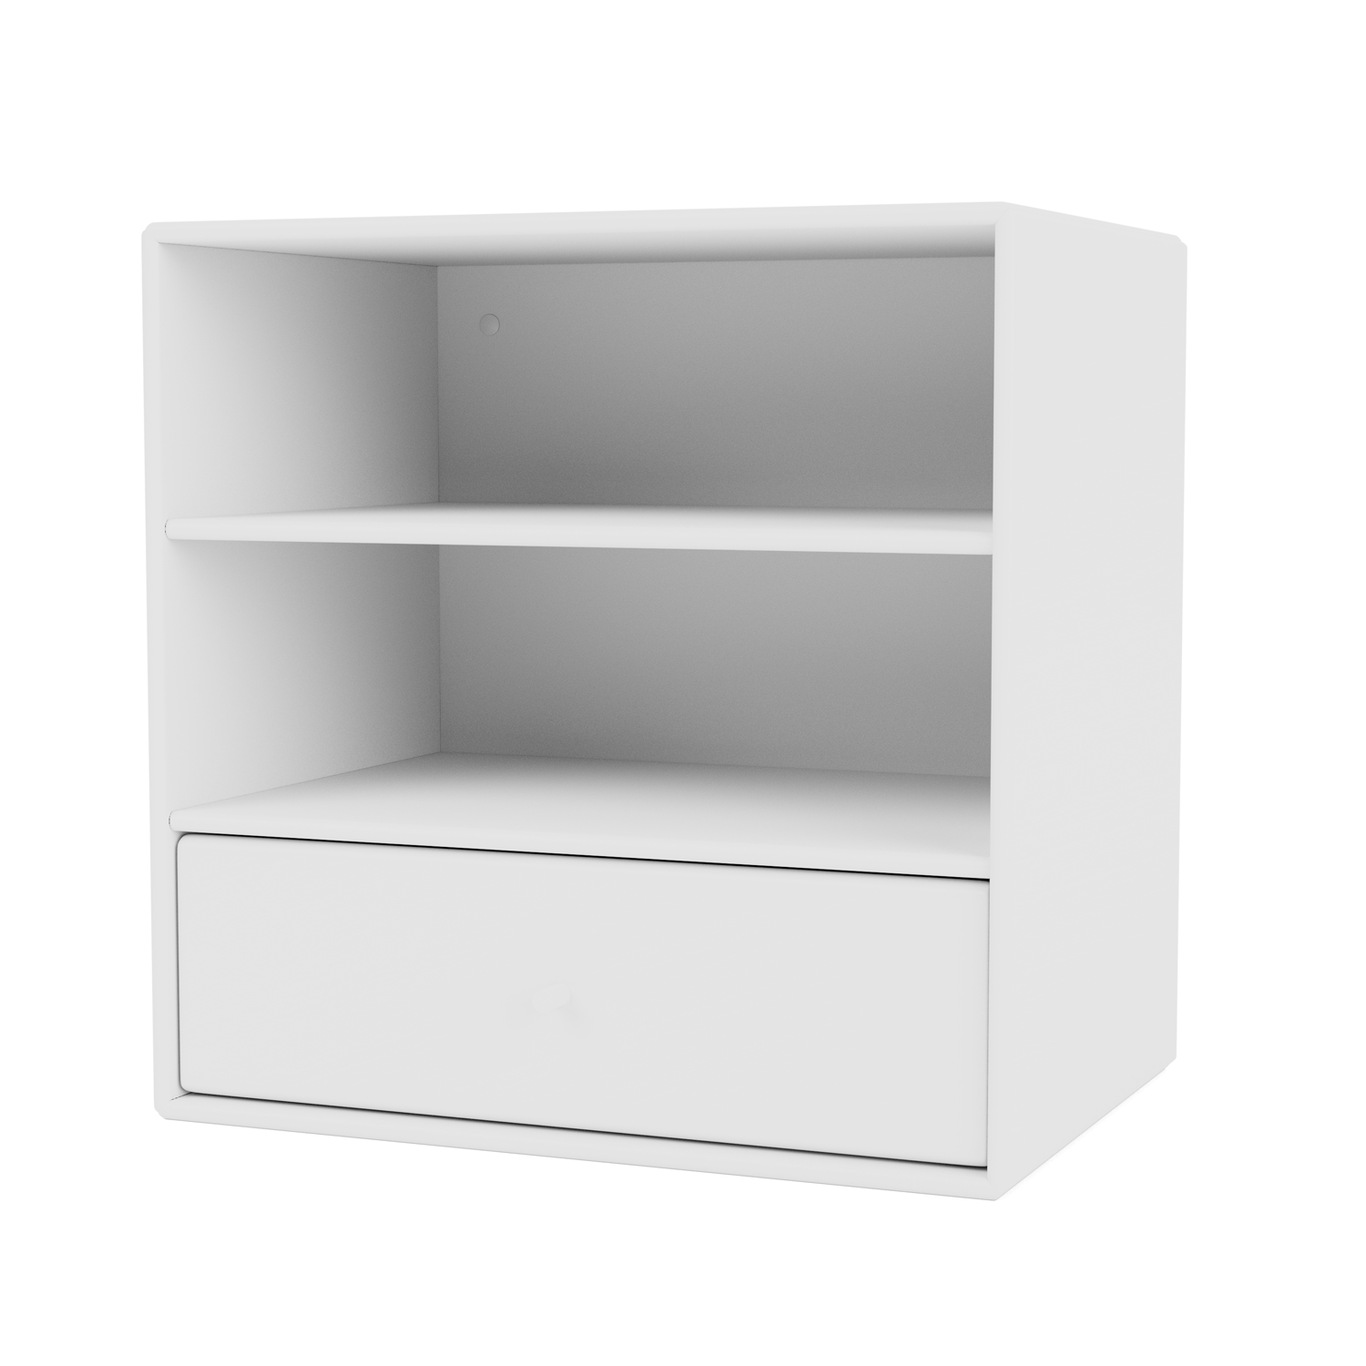 Mini 1005 Shelf With One Drawer, New White